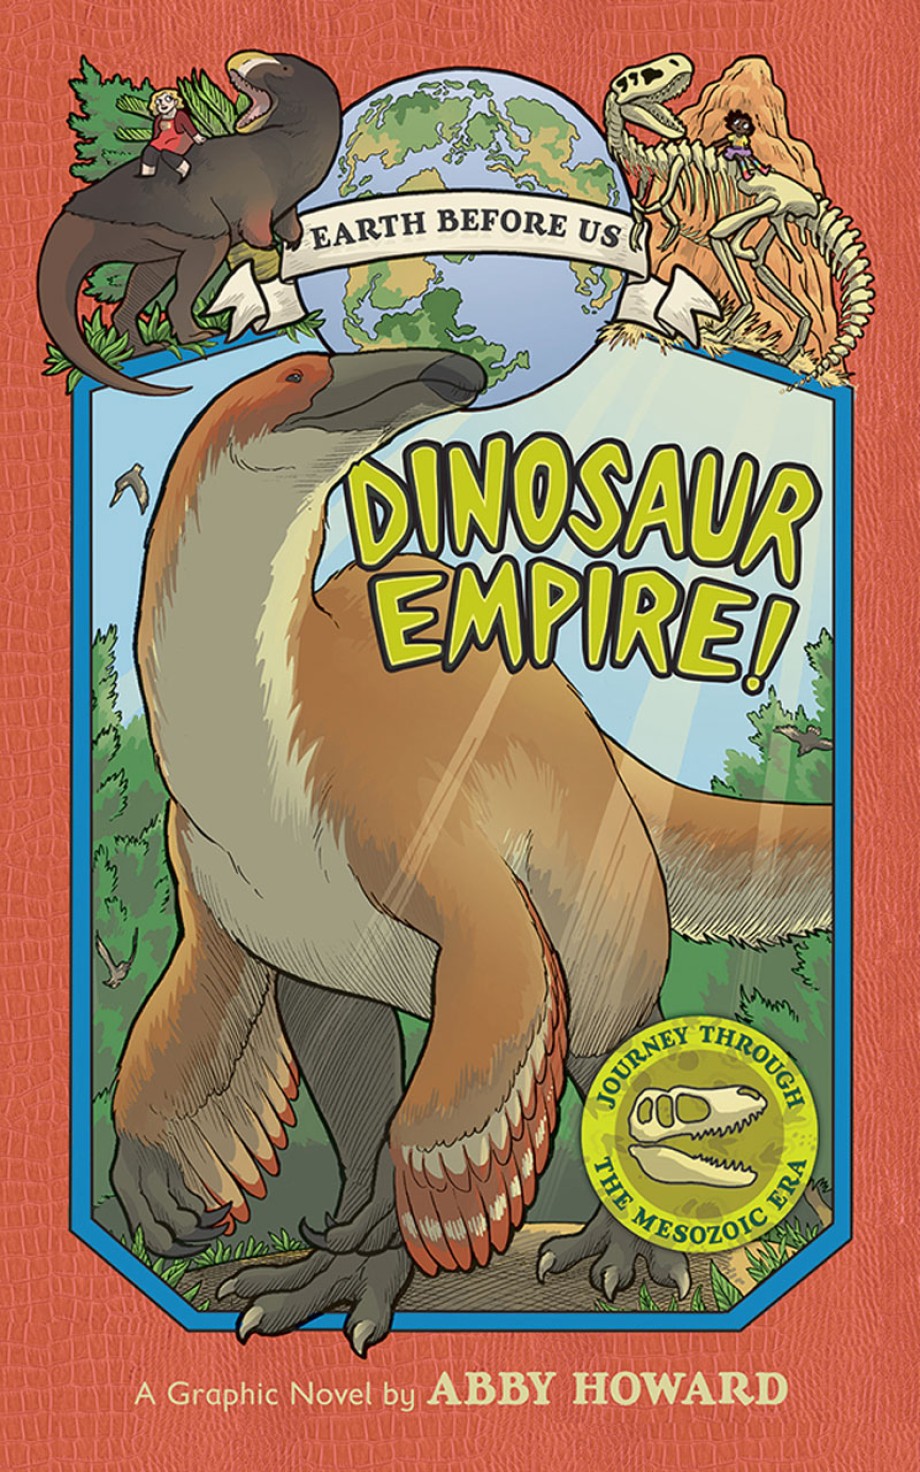 Dinosaur Empire! (Earth Before Us #1) Journey through the Mesozoic Era